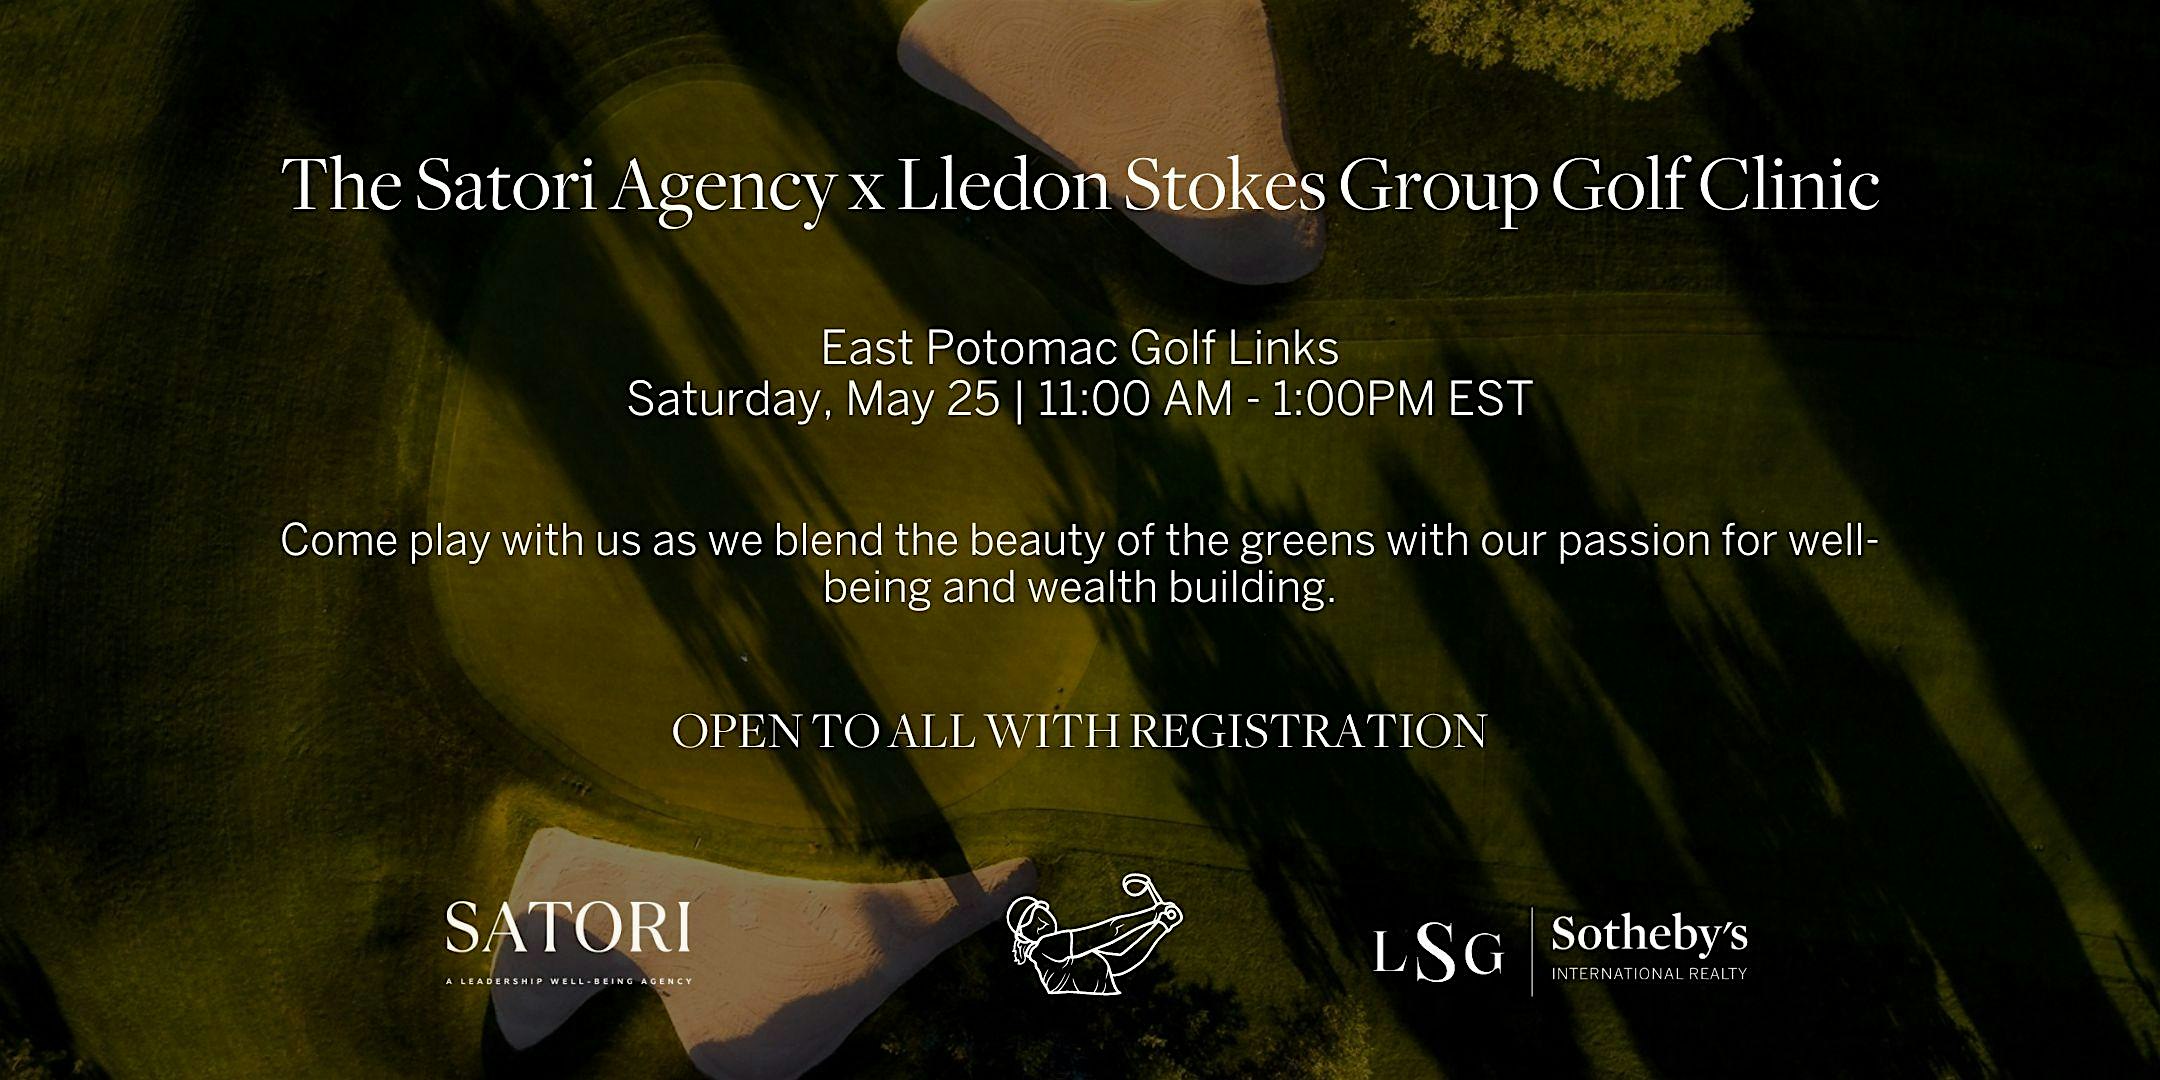 The Satori Agency x Lledon Stokes Group Golf Clinic